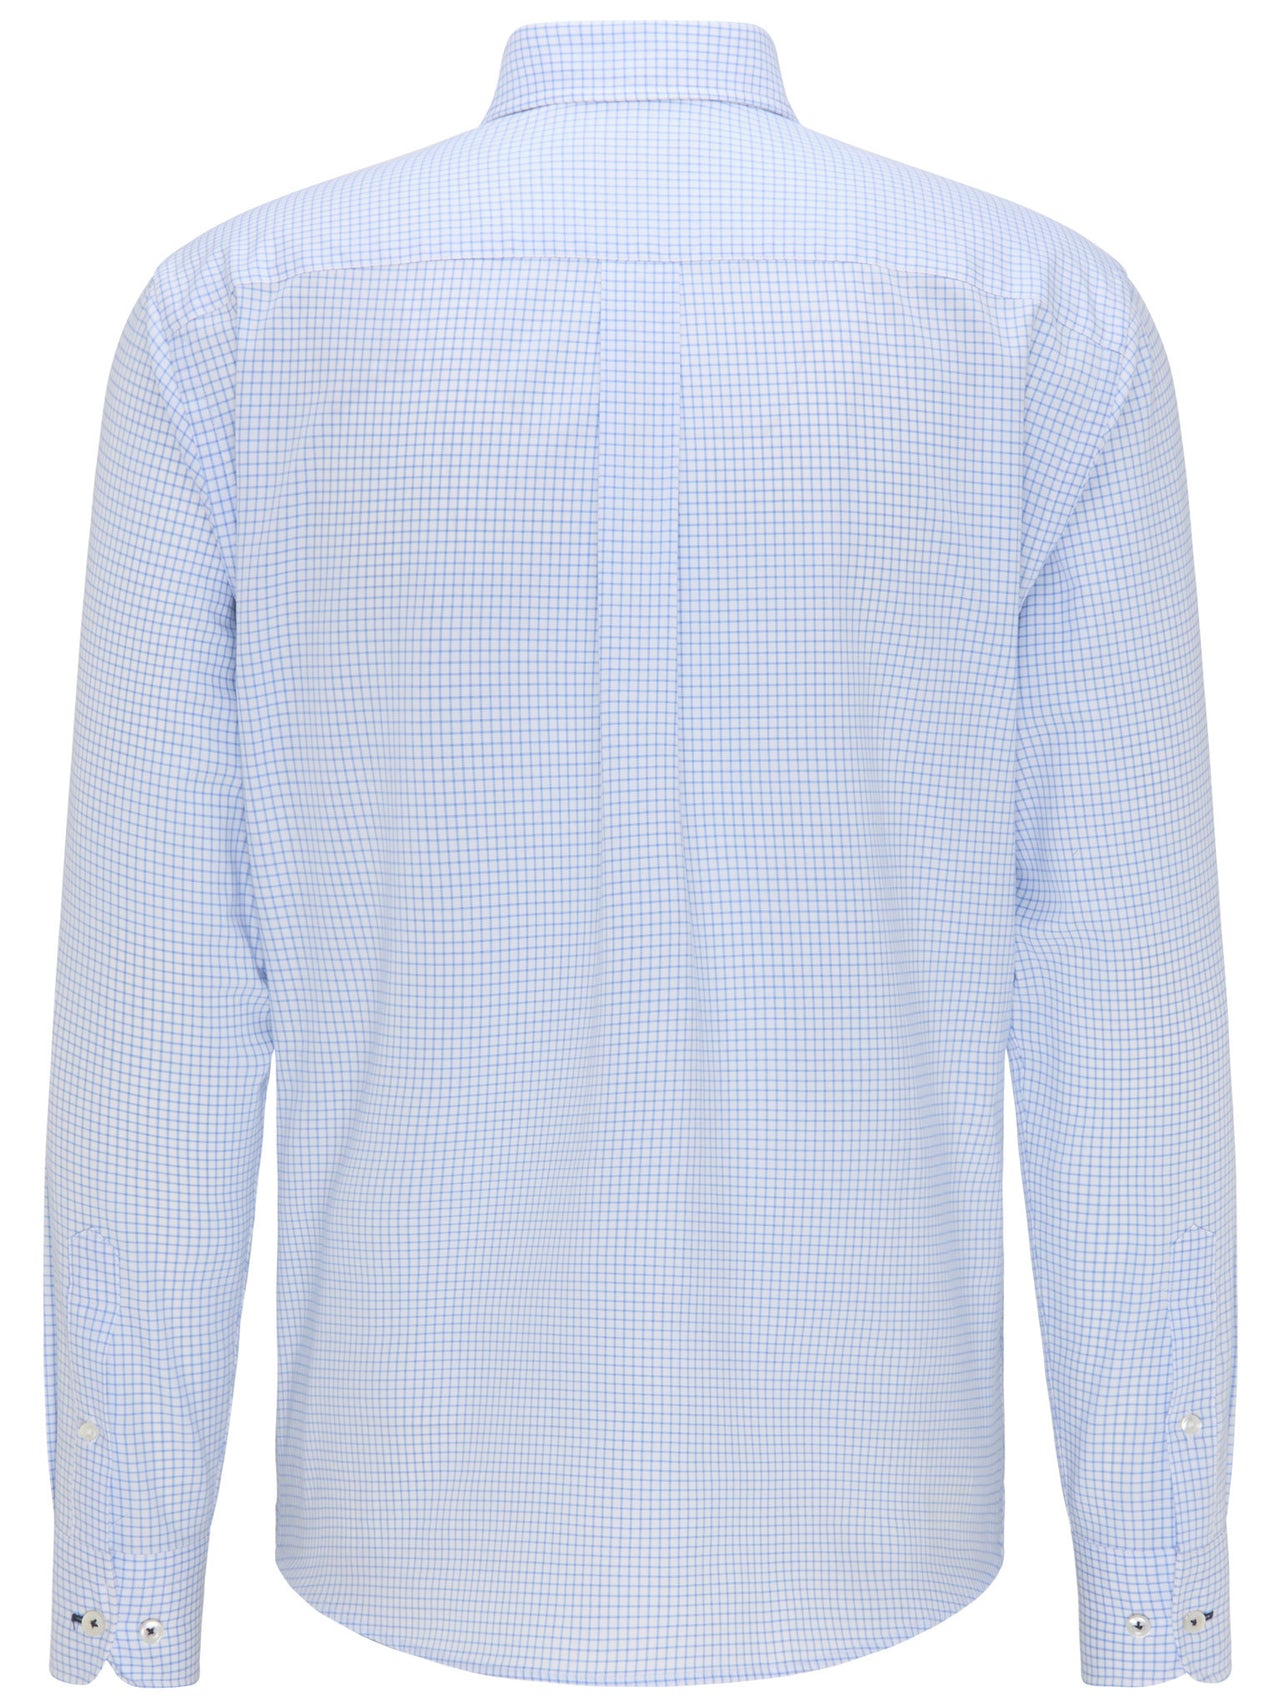 Fynch Hatton All Season Oxford Shirt in Blue Check